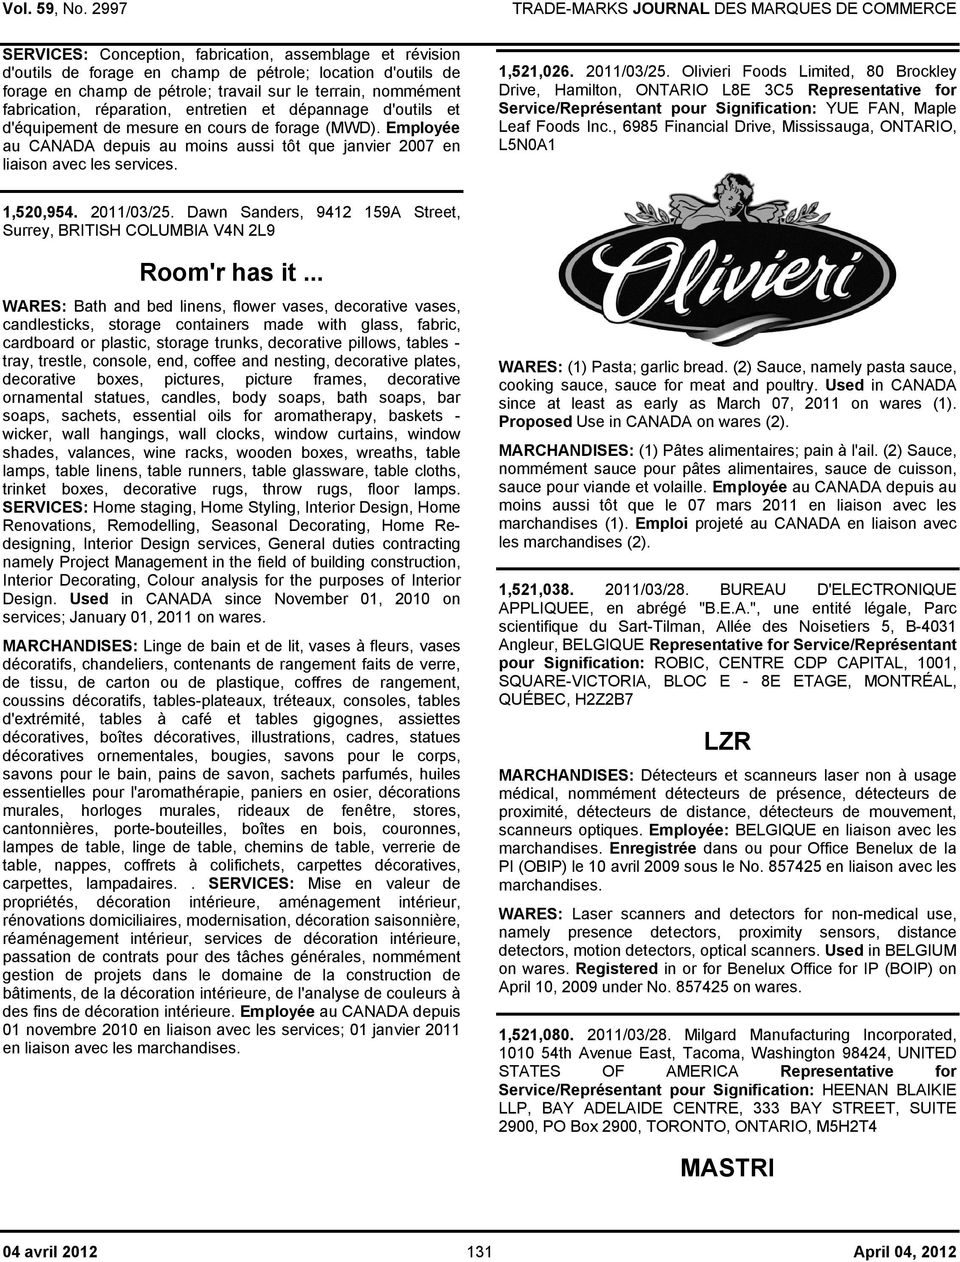 2011/03/25. Olivieri Foods Limited, 80 Brockley Drive, Hamilton, ONTARIO L8E 3C5 Representative for Service/Représentant pour Signification: YUE FAN, Maple Leaf Foods Inc.